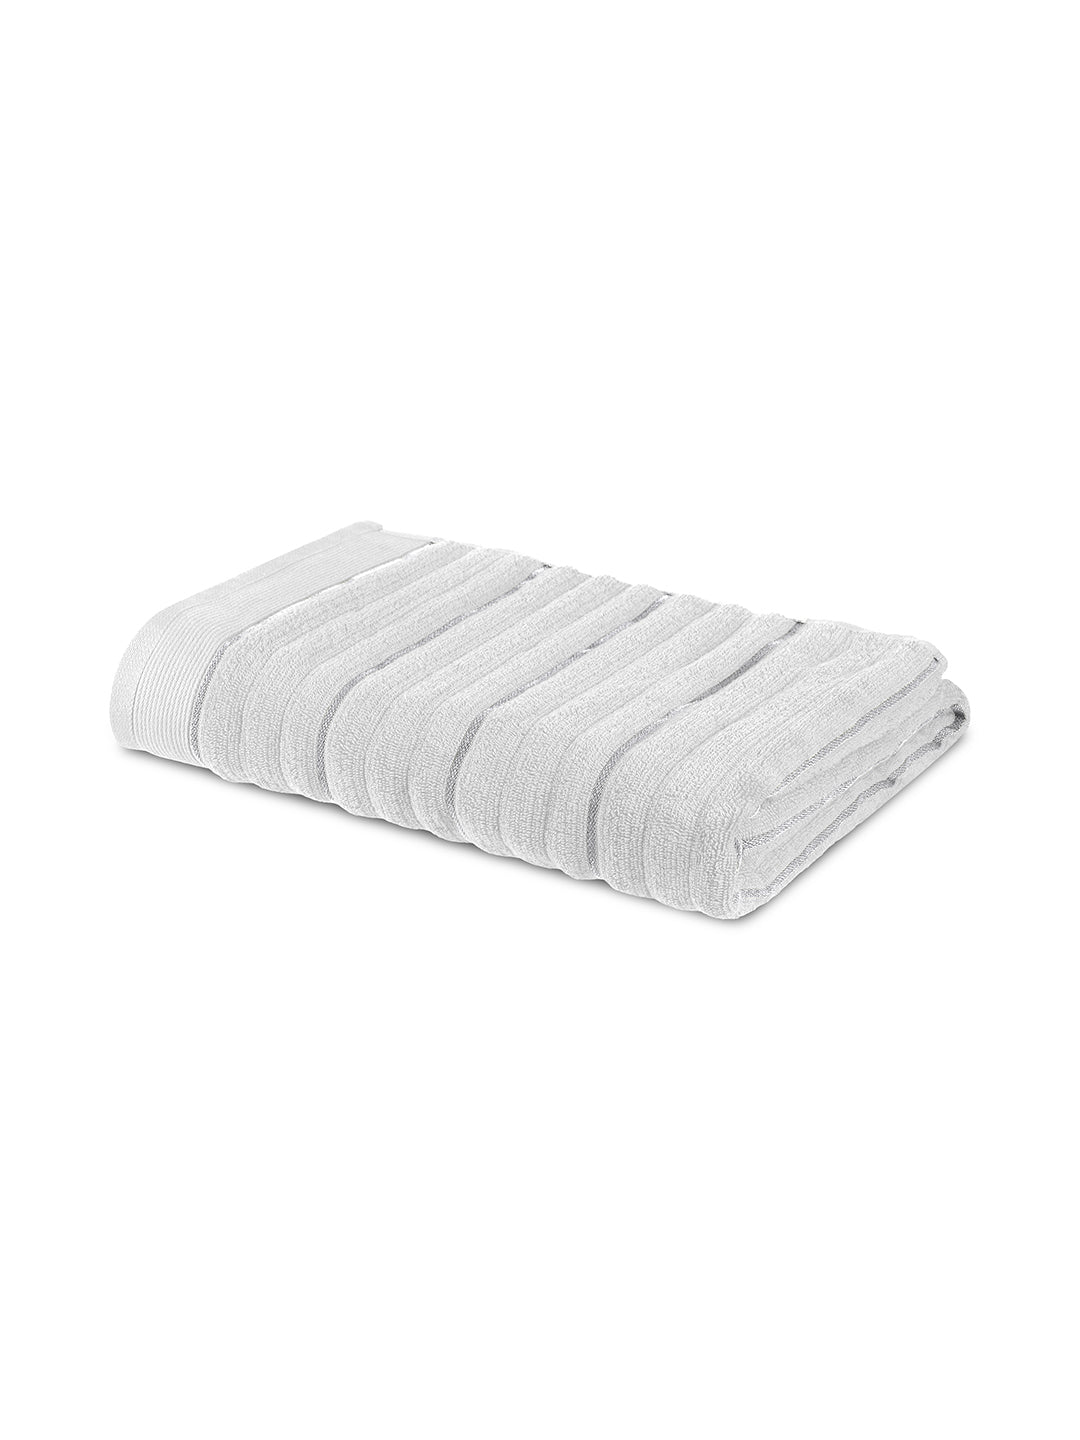 Elite Plush Quickdry Bath Towel